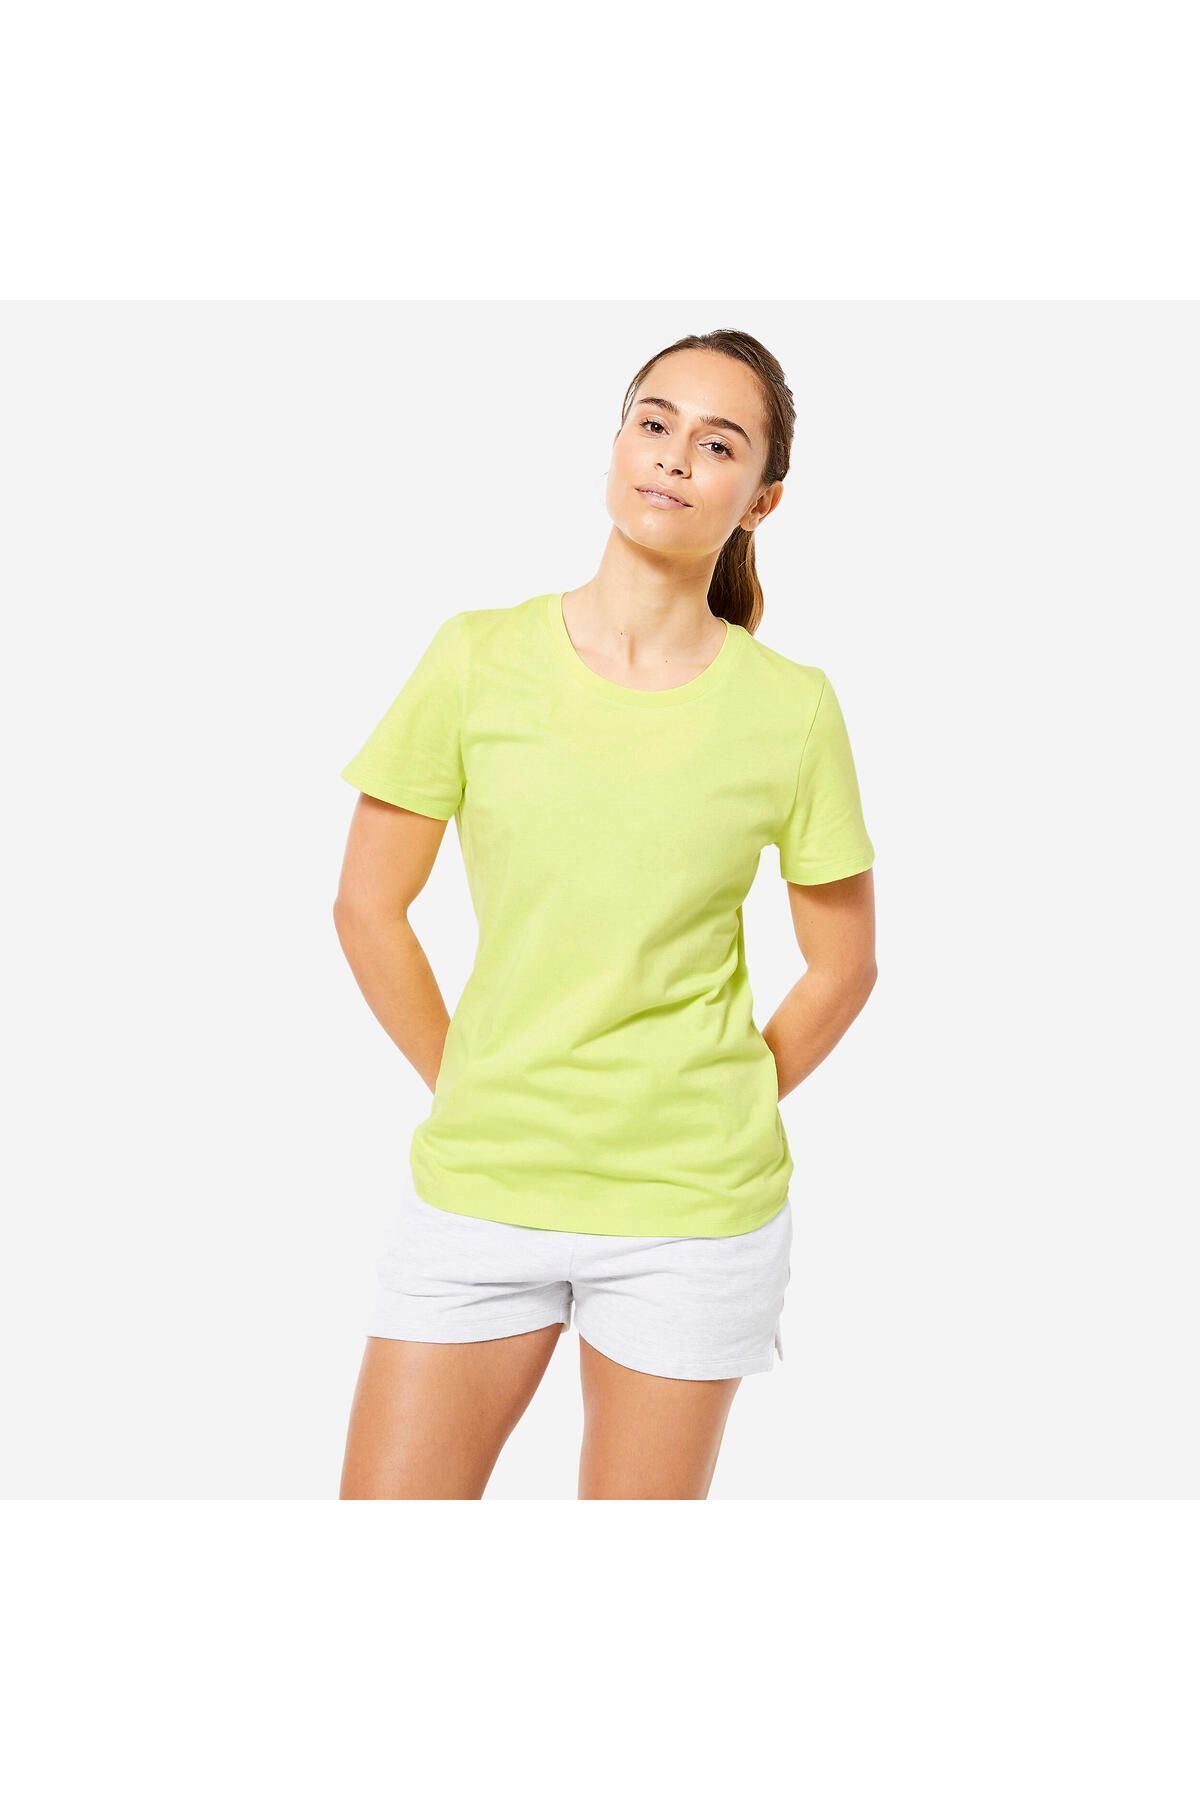 Decathlon Kadın Sarı Regular Spor Tişörtü 500 Essentials - Fitness Hafif Antrenman